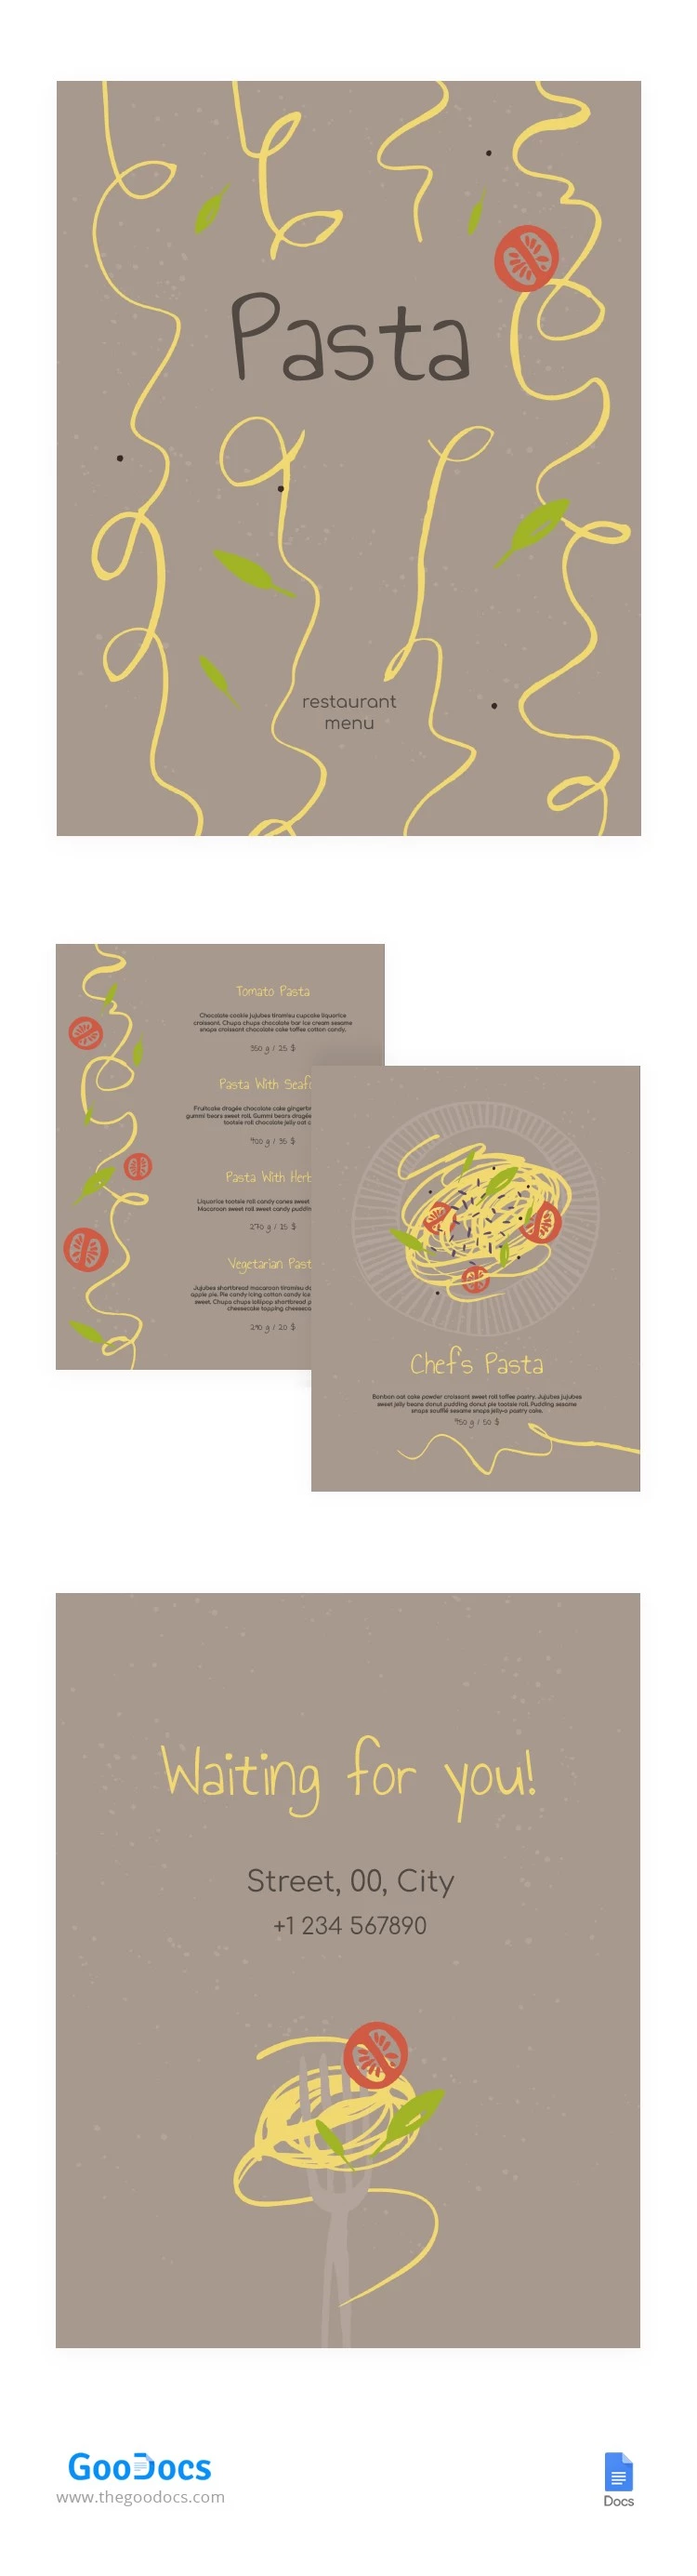 Menu del ristorante di pasta - free Google Docs Template - 10064020